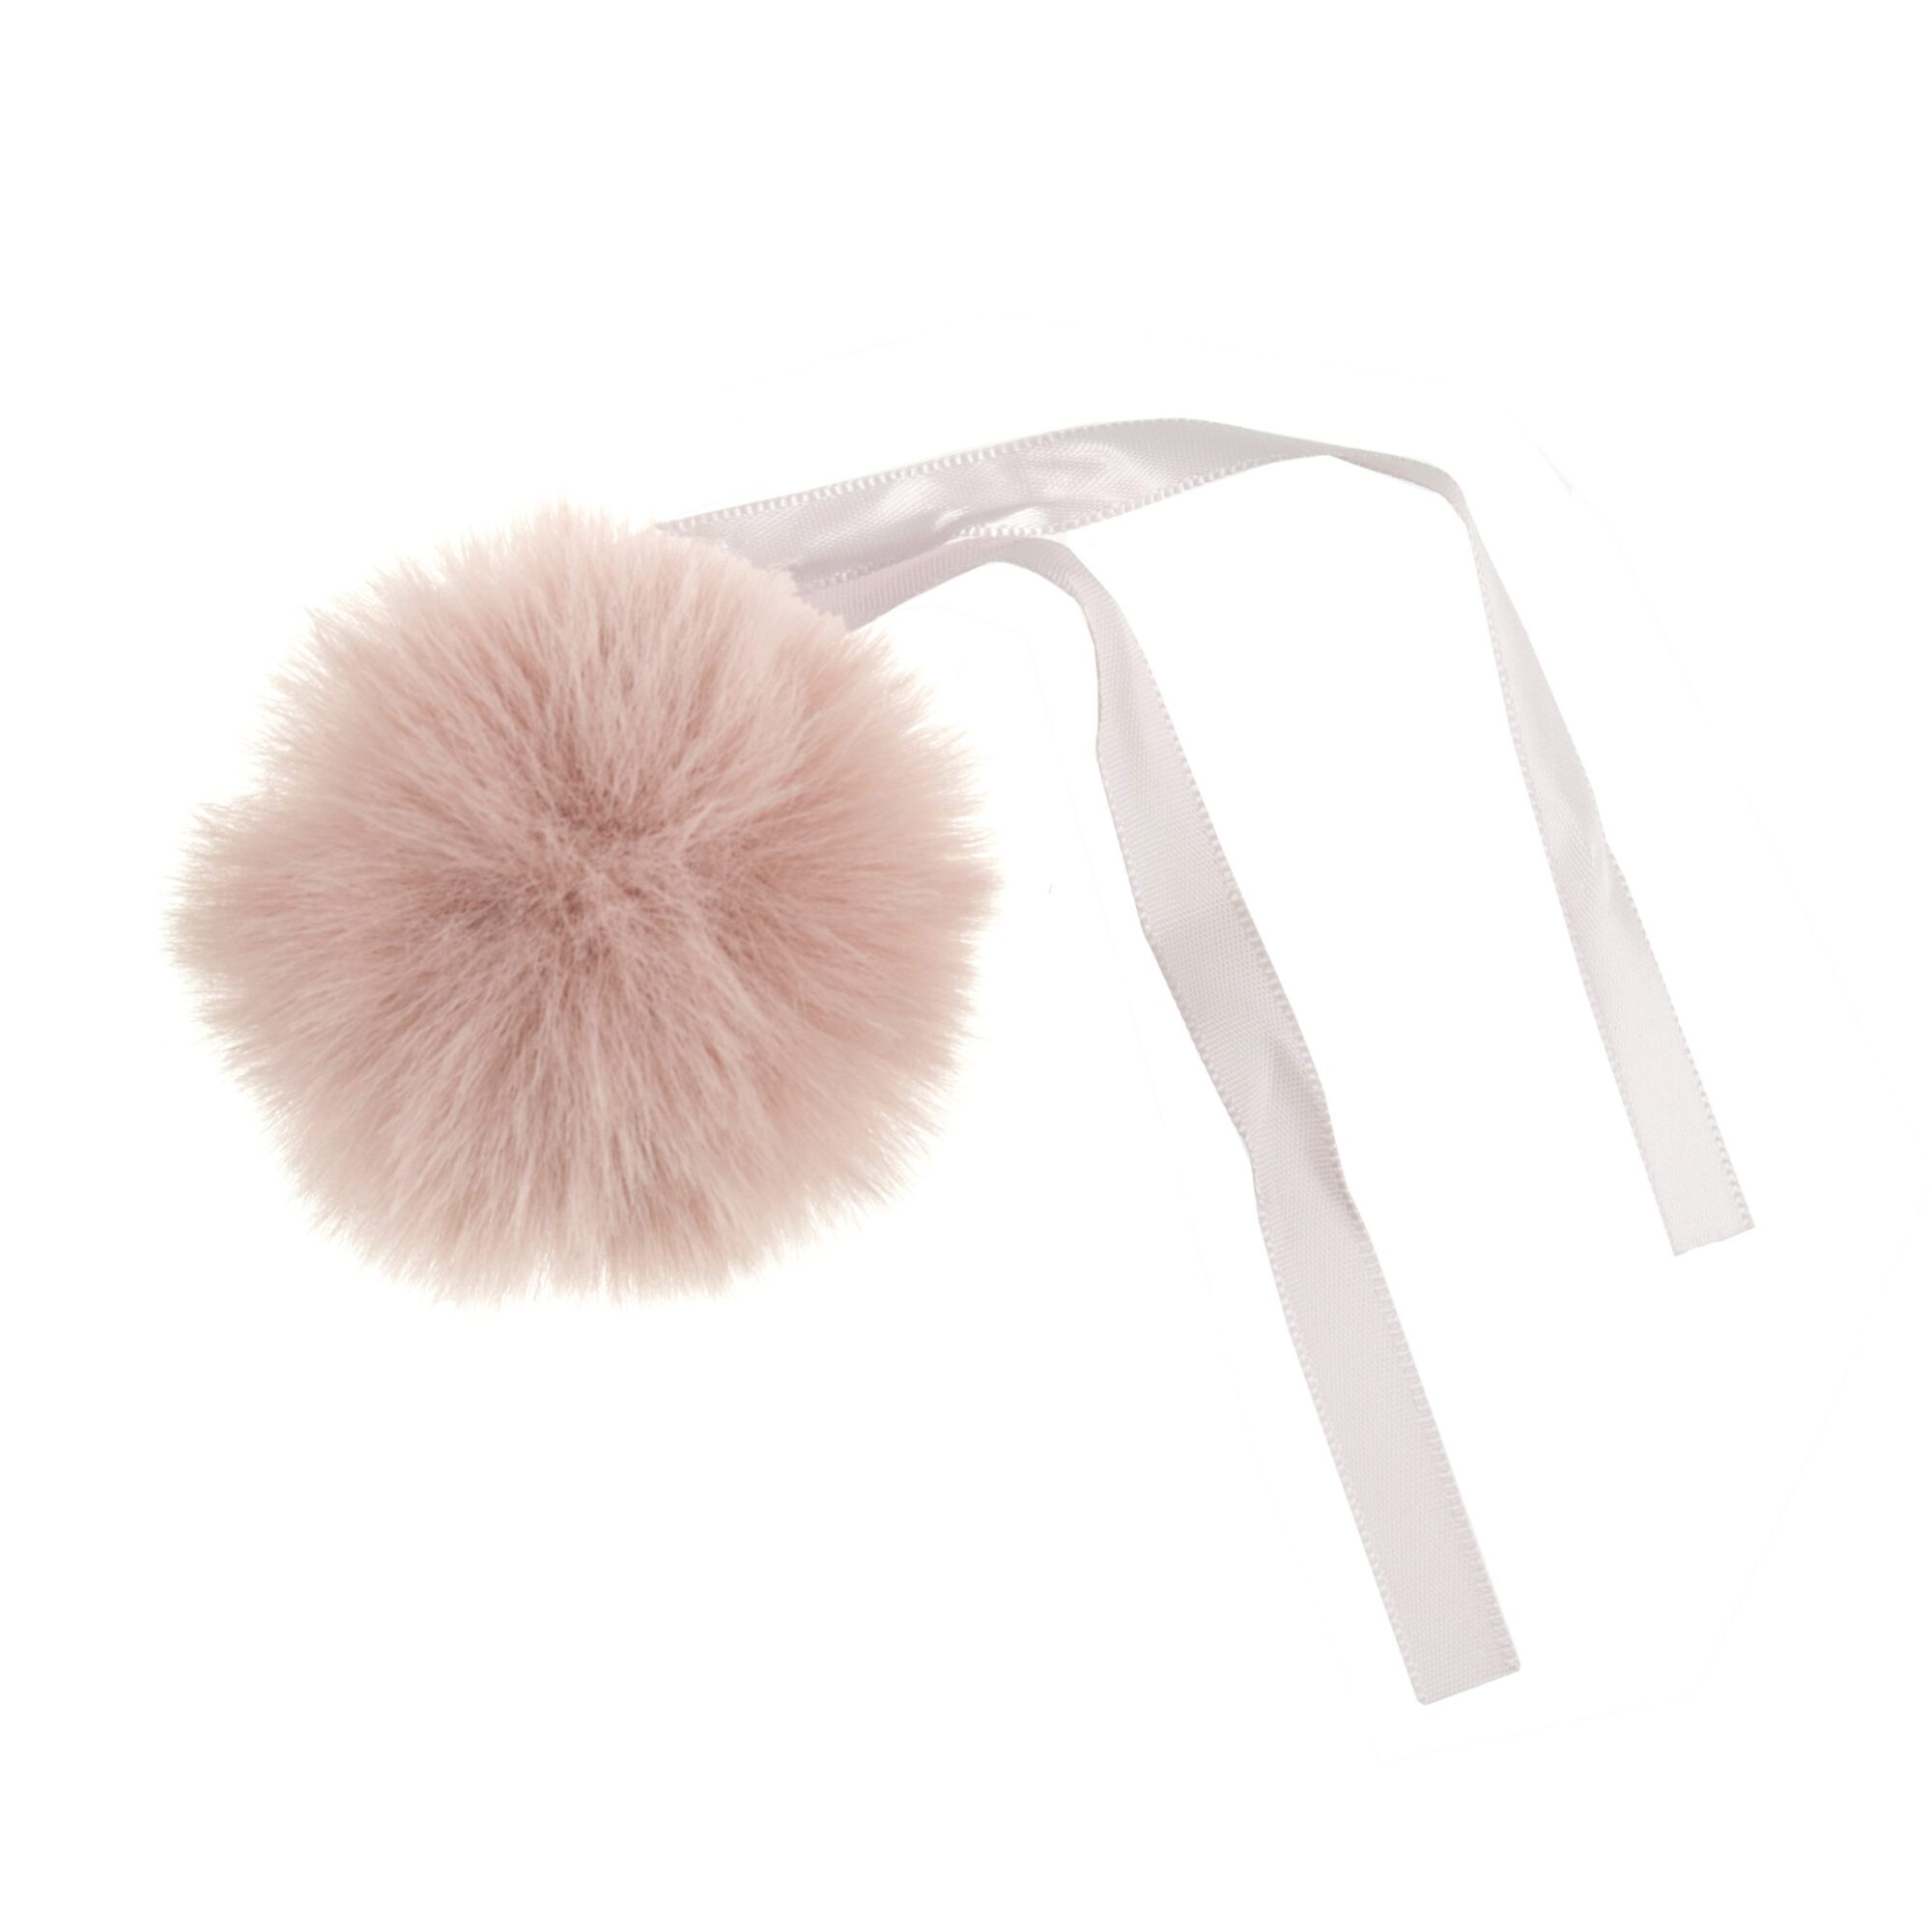 Medium Faux Fur Pom Pom 6cm - Light Pink product image